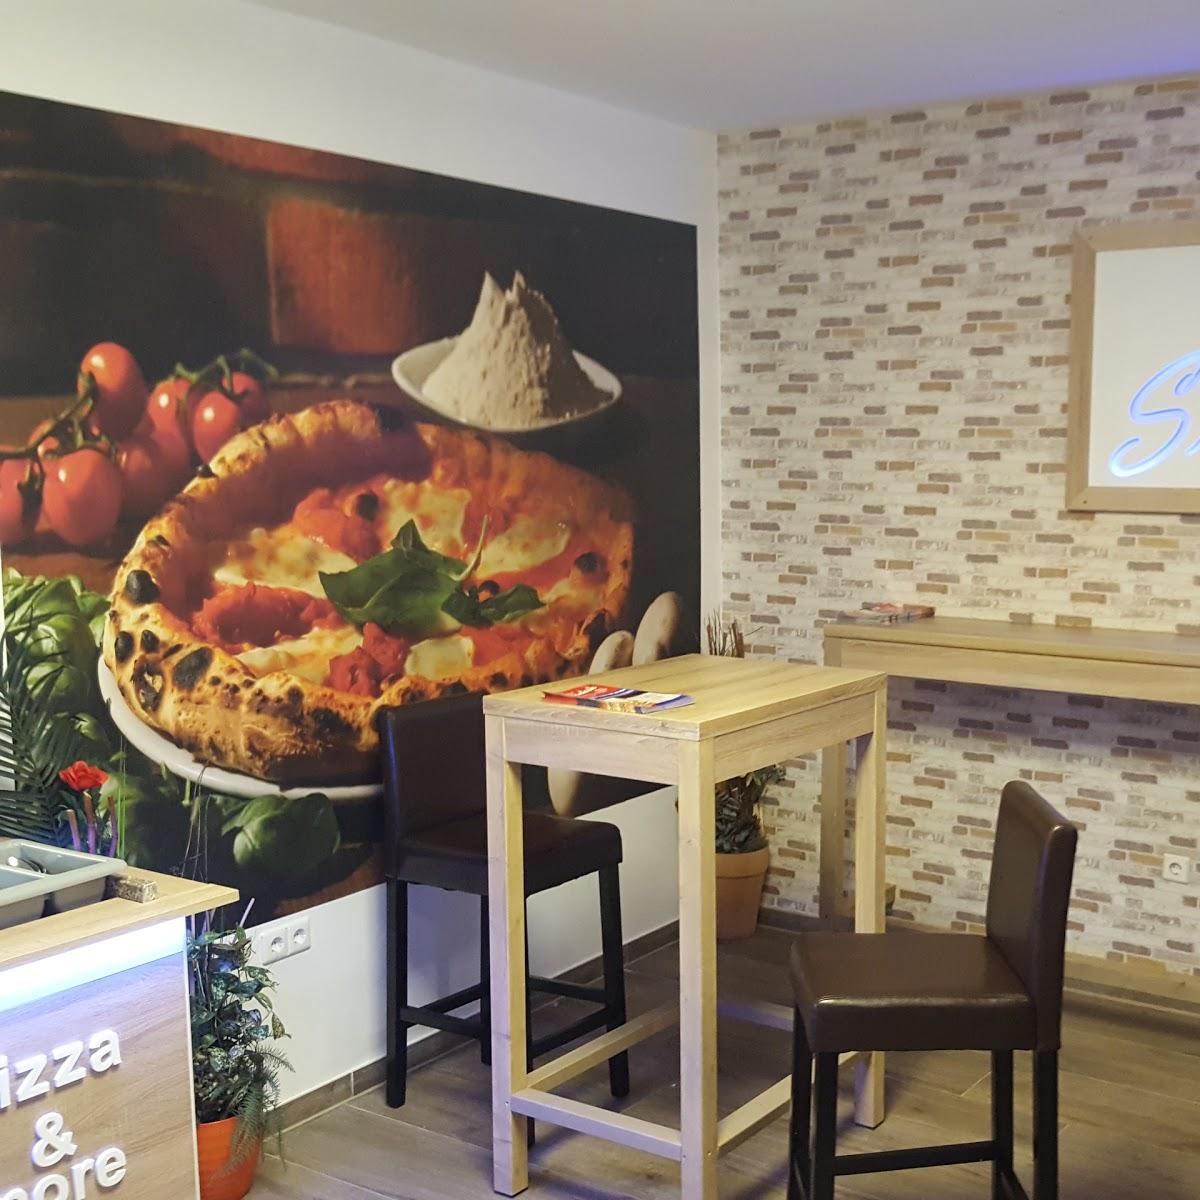 Restaurant "Santosh Pizza and More" in Meppen